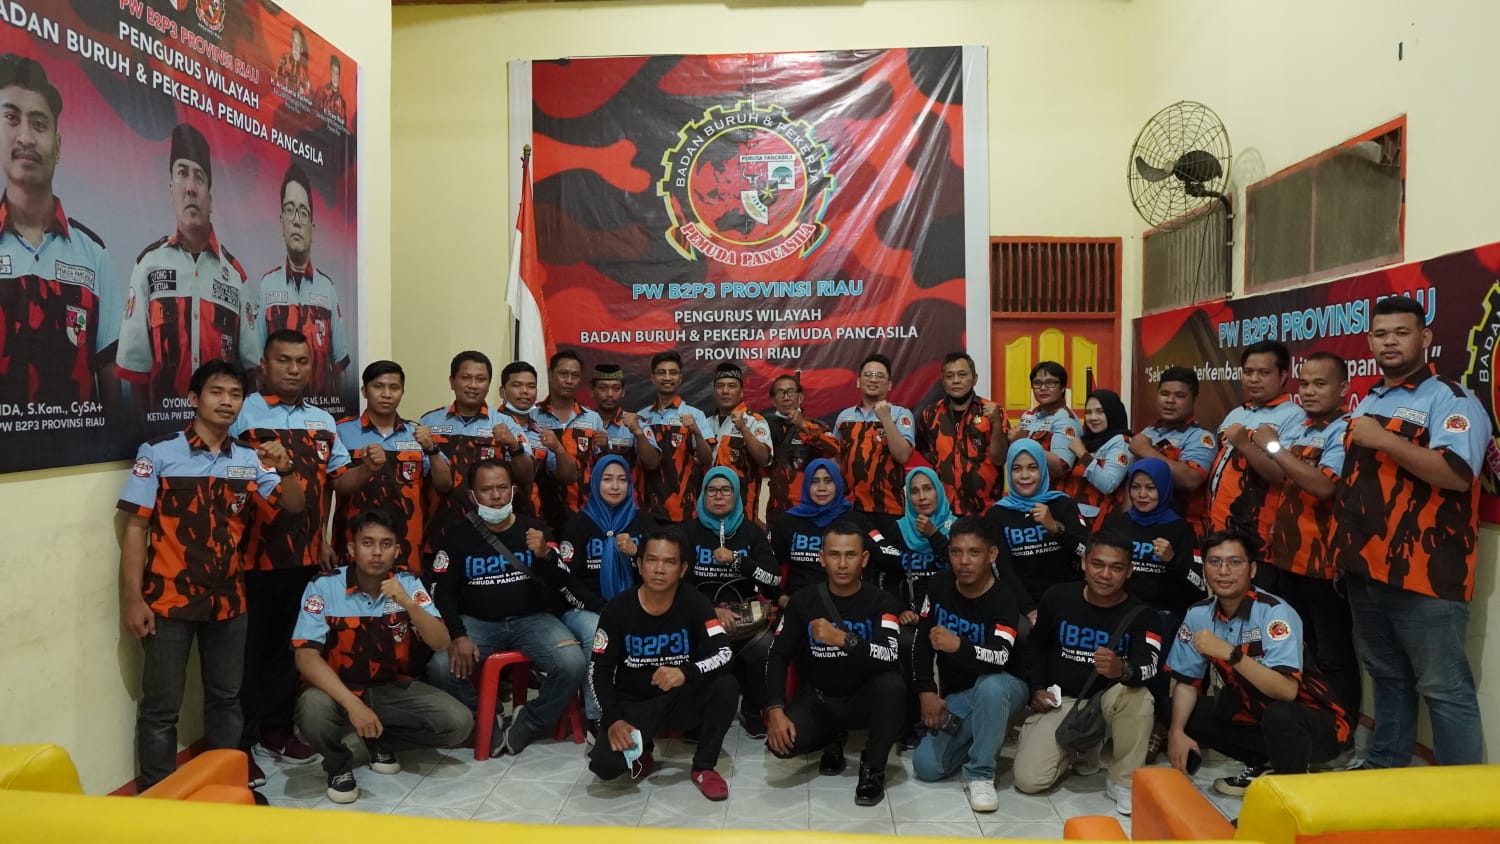 Peringati Hari Pahlawan, PW B2P3 Provinsi Riau Edukasi Buruh dan Pekerja Melalui Live Talk Show